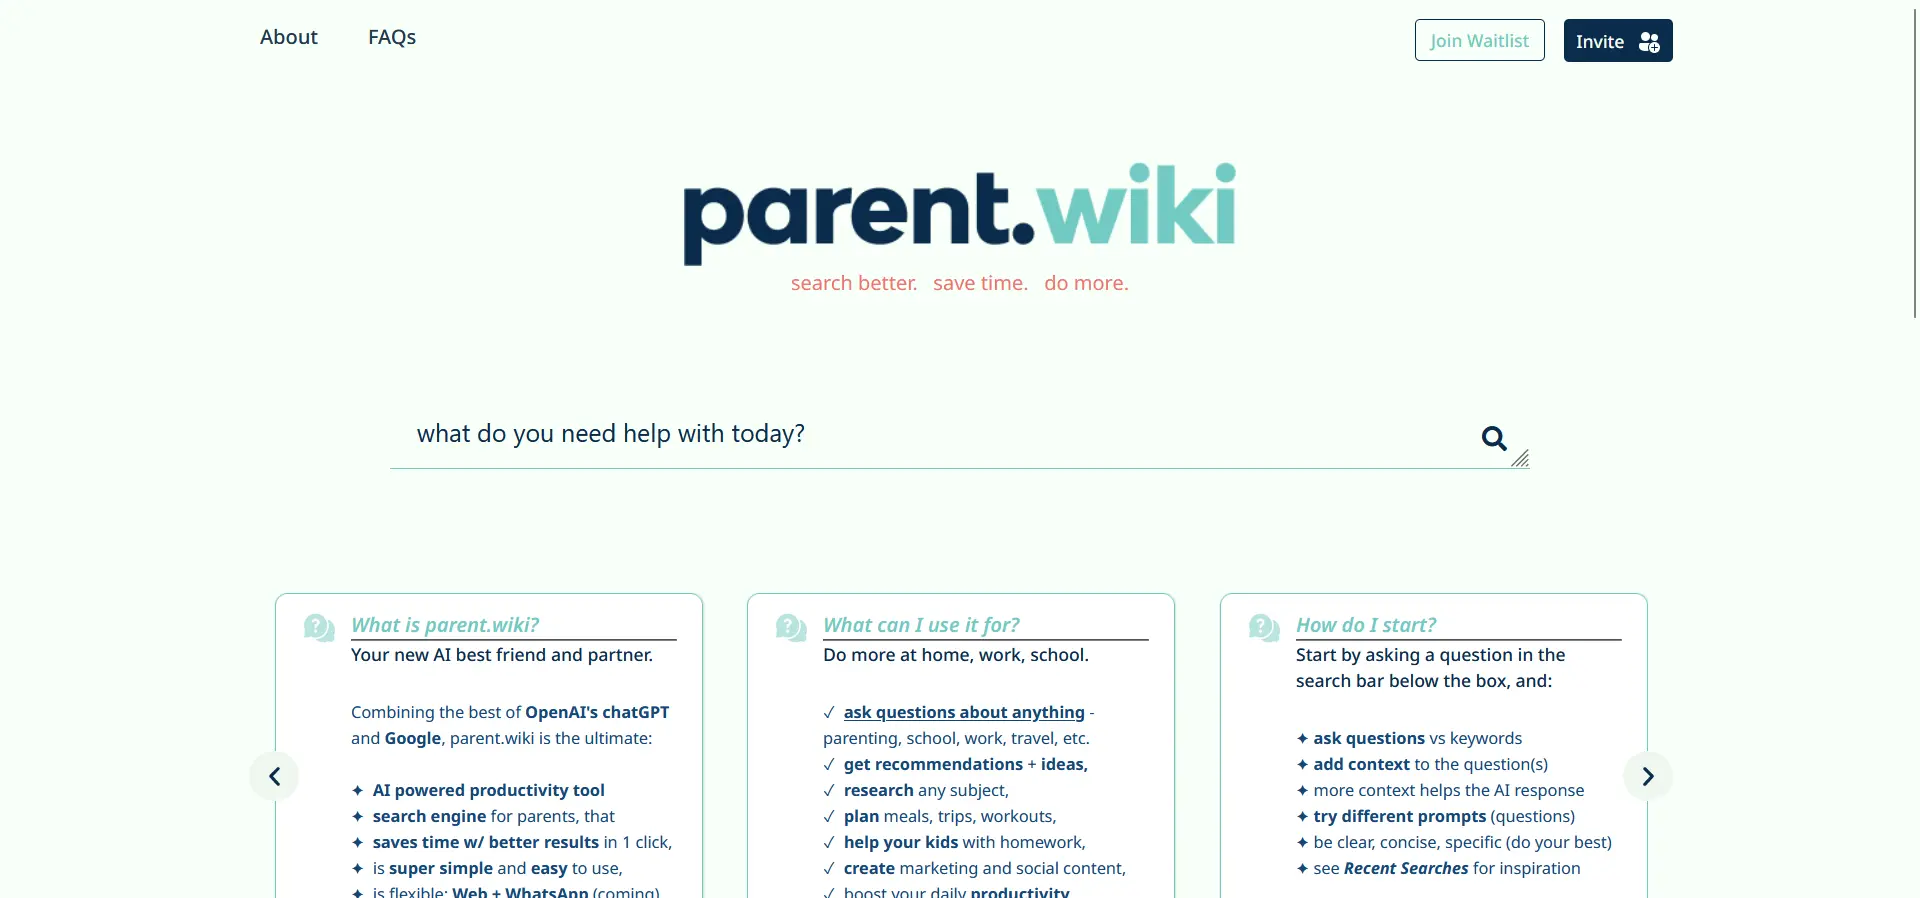 Parent.wikiwebsite picture